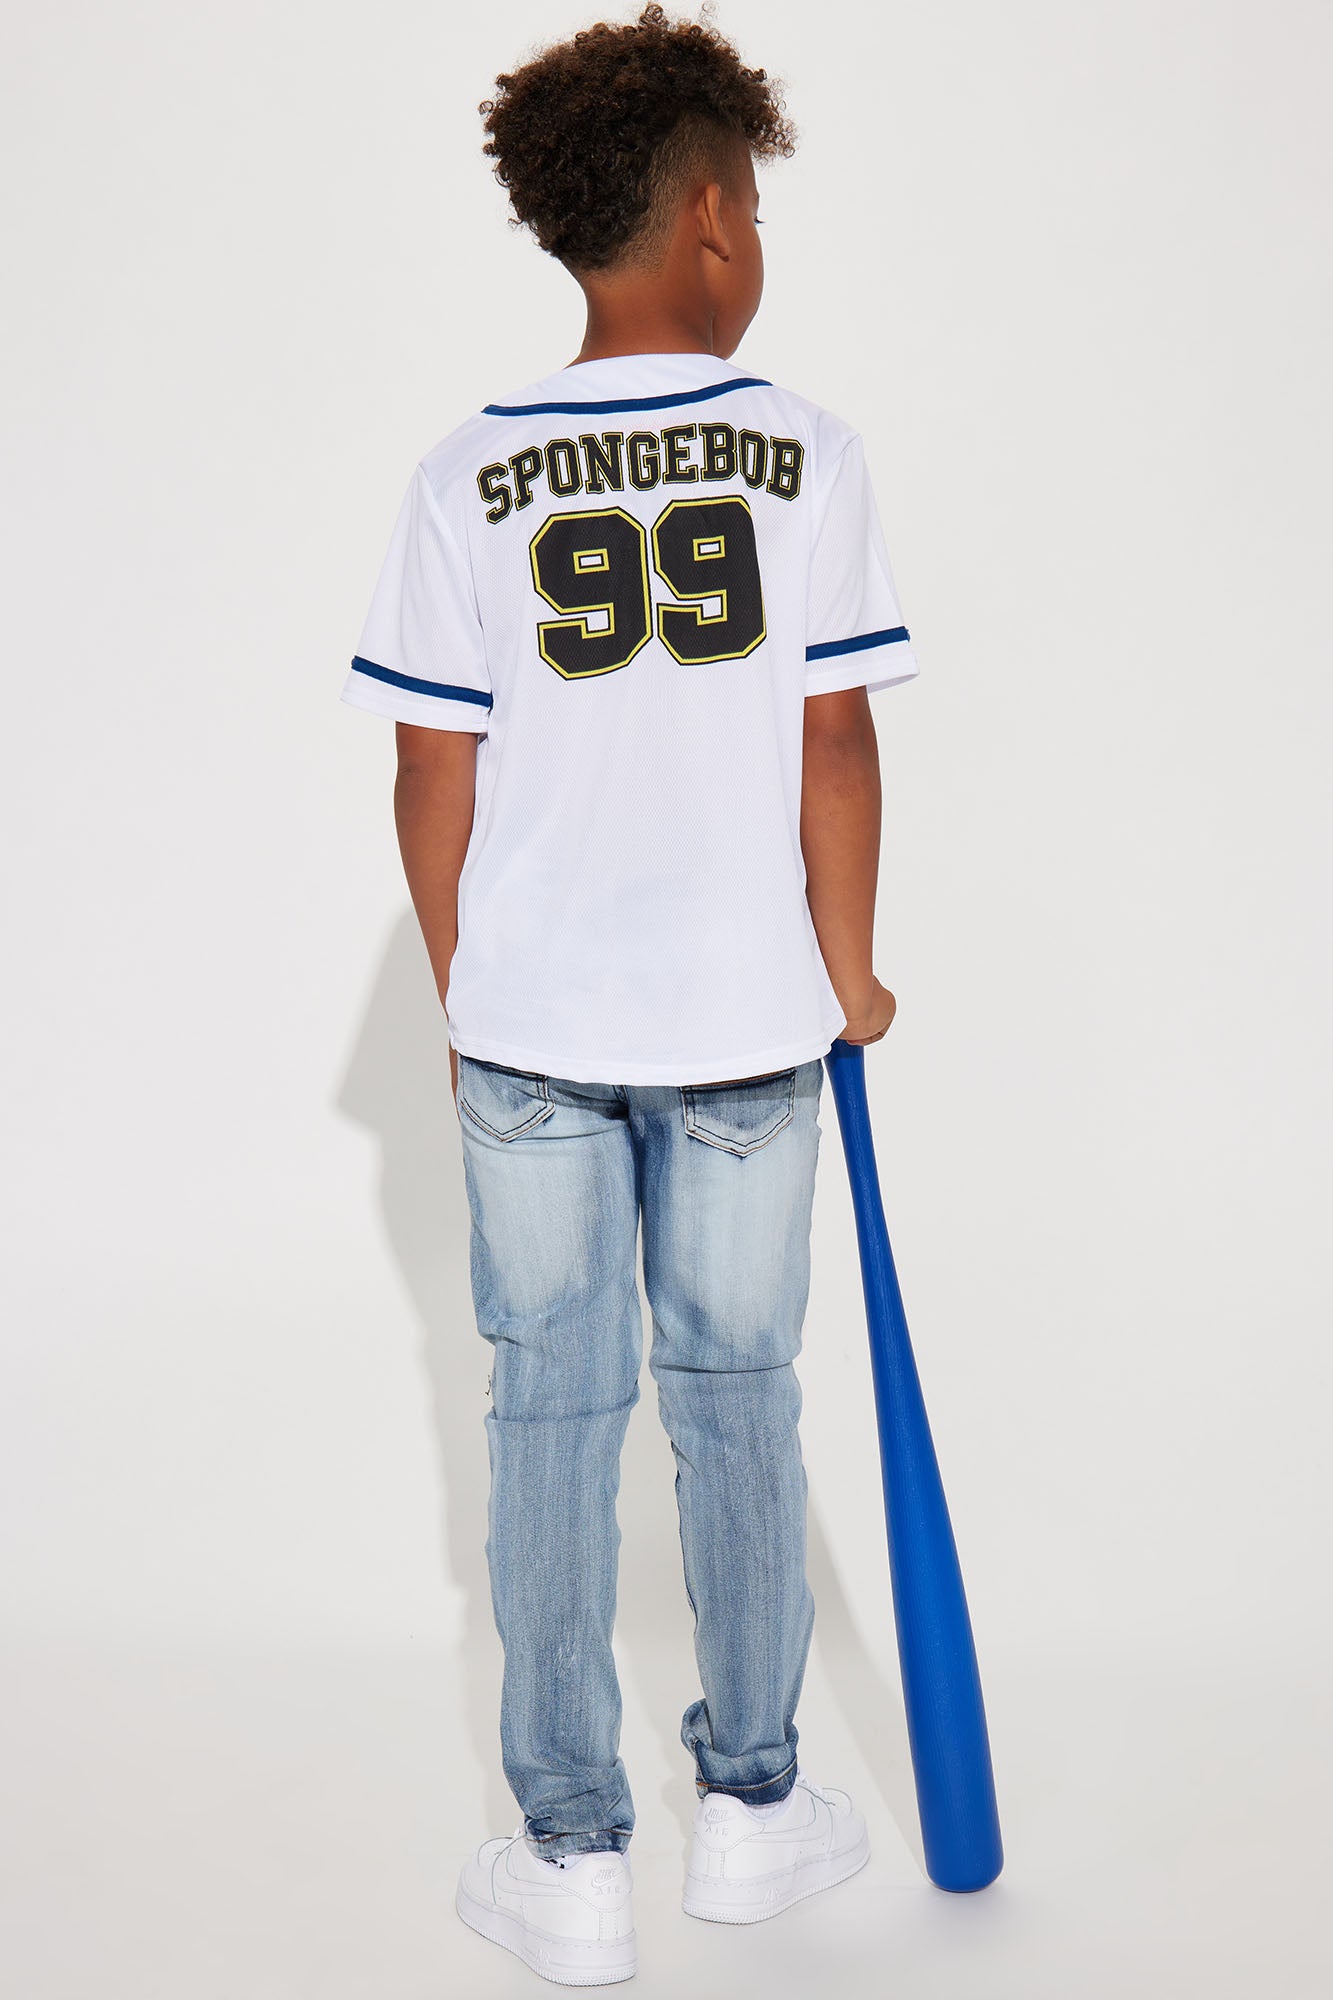 Personalized Spongebob Squarepants Black Baseball Jersey Shirt